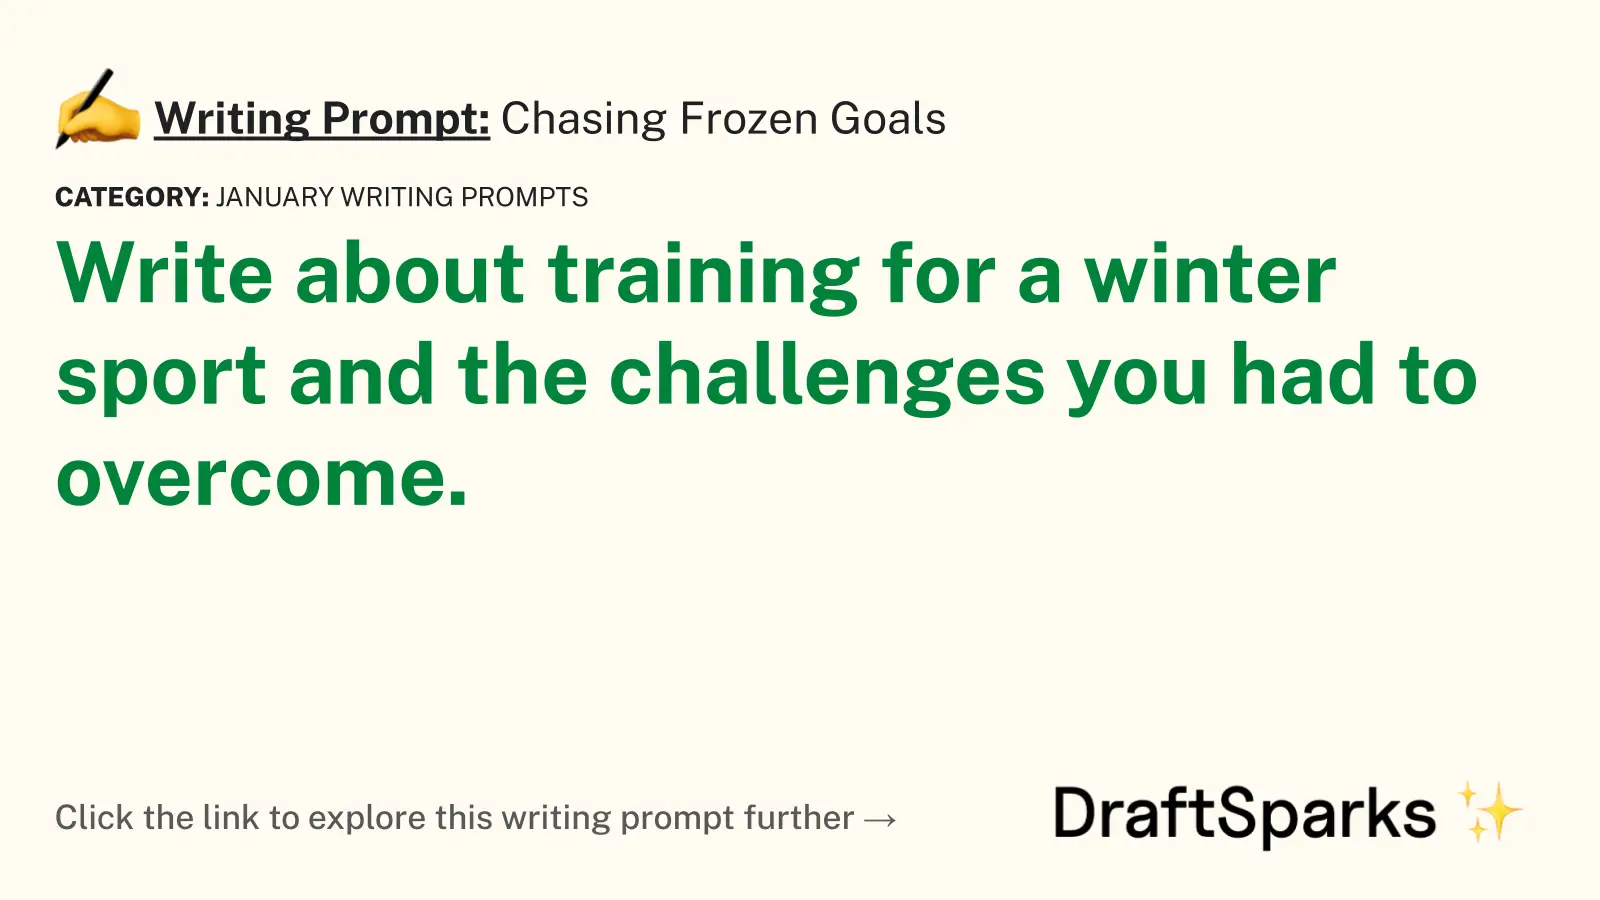 Chasing Frozen Goals